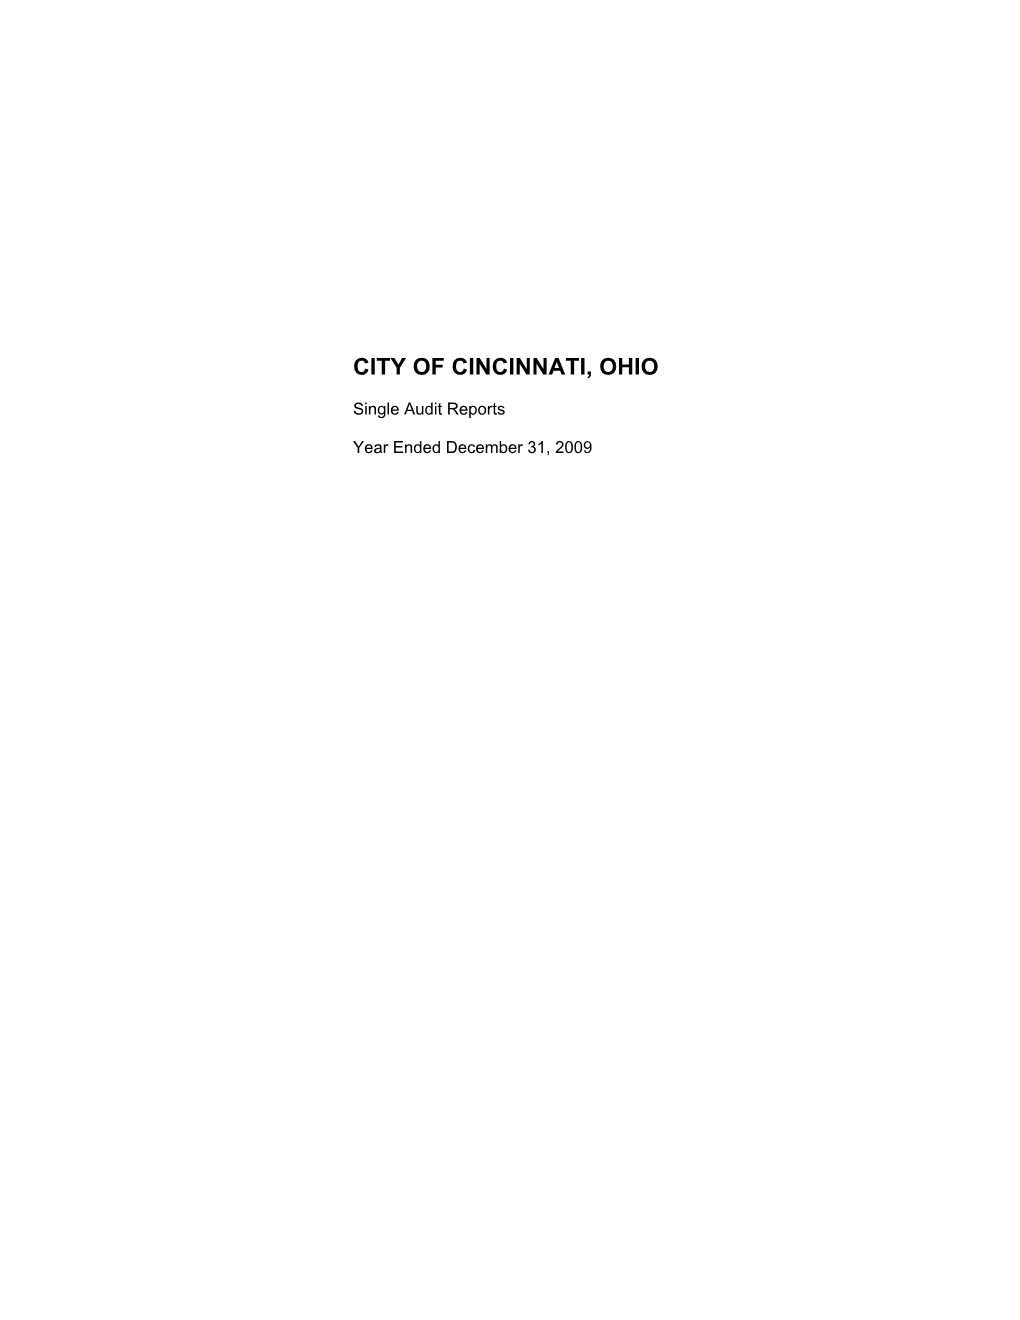 City of Cincinnati, Ohio